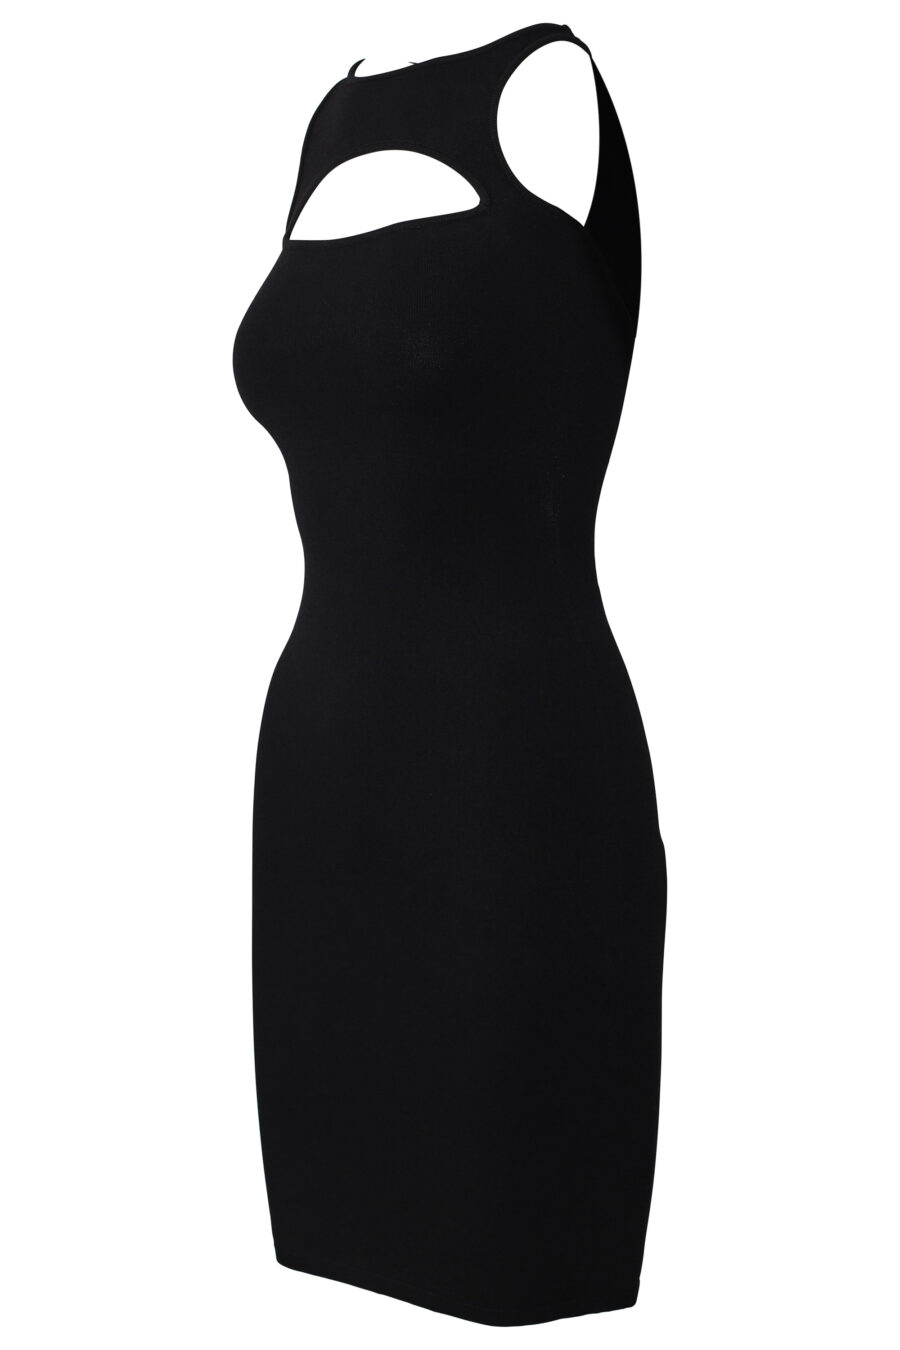 Black dress with slit - IMG 0570